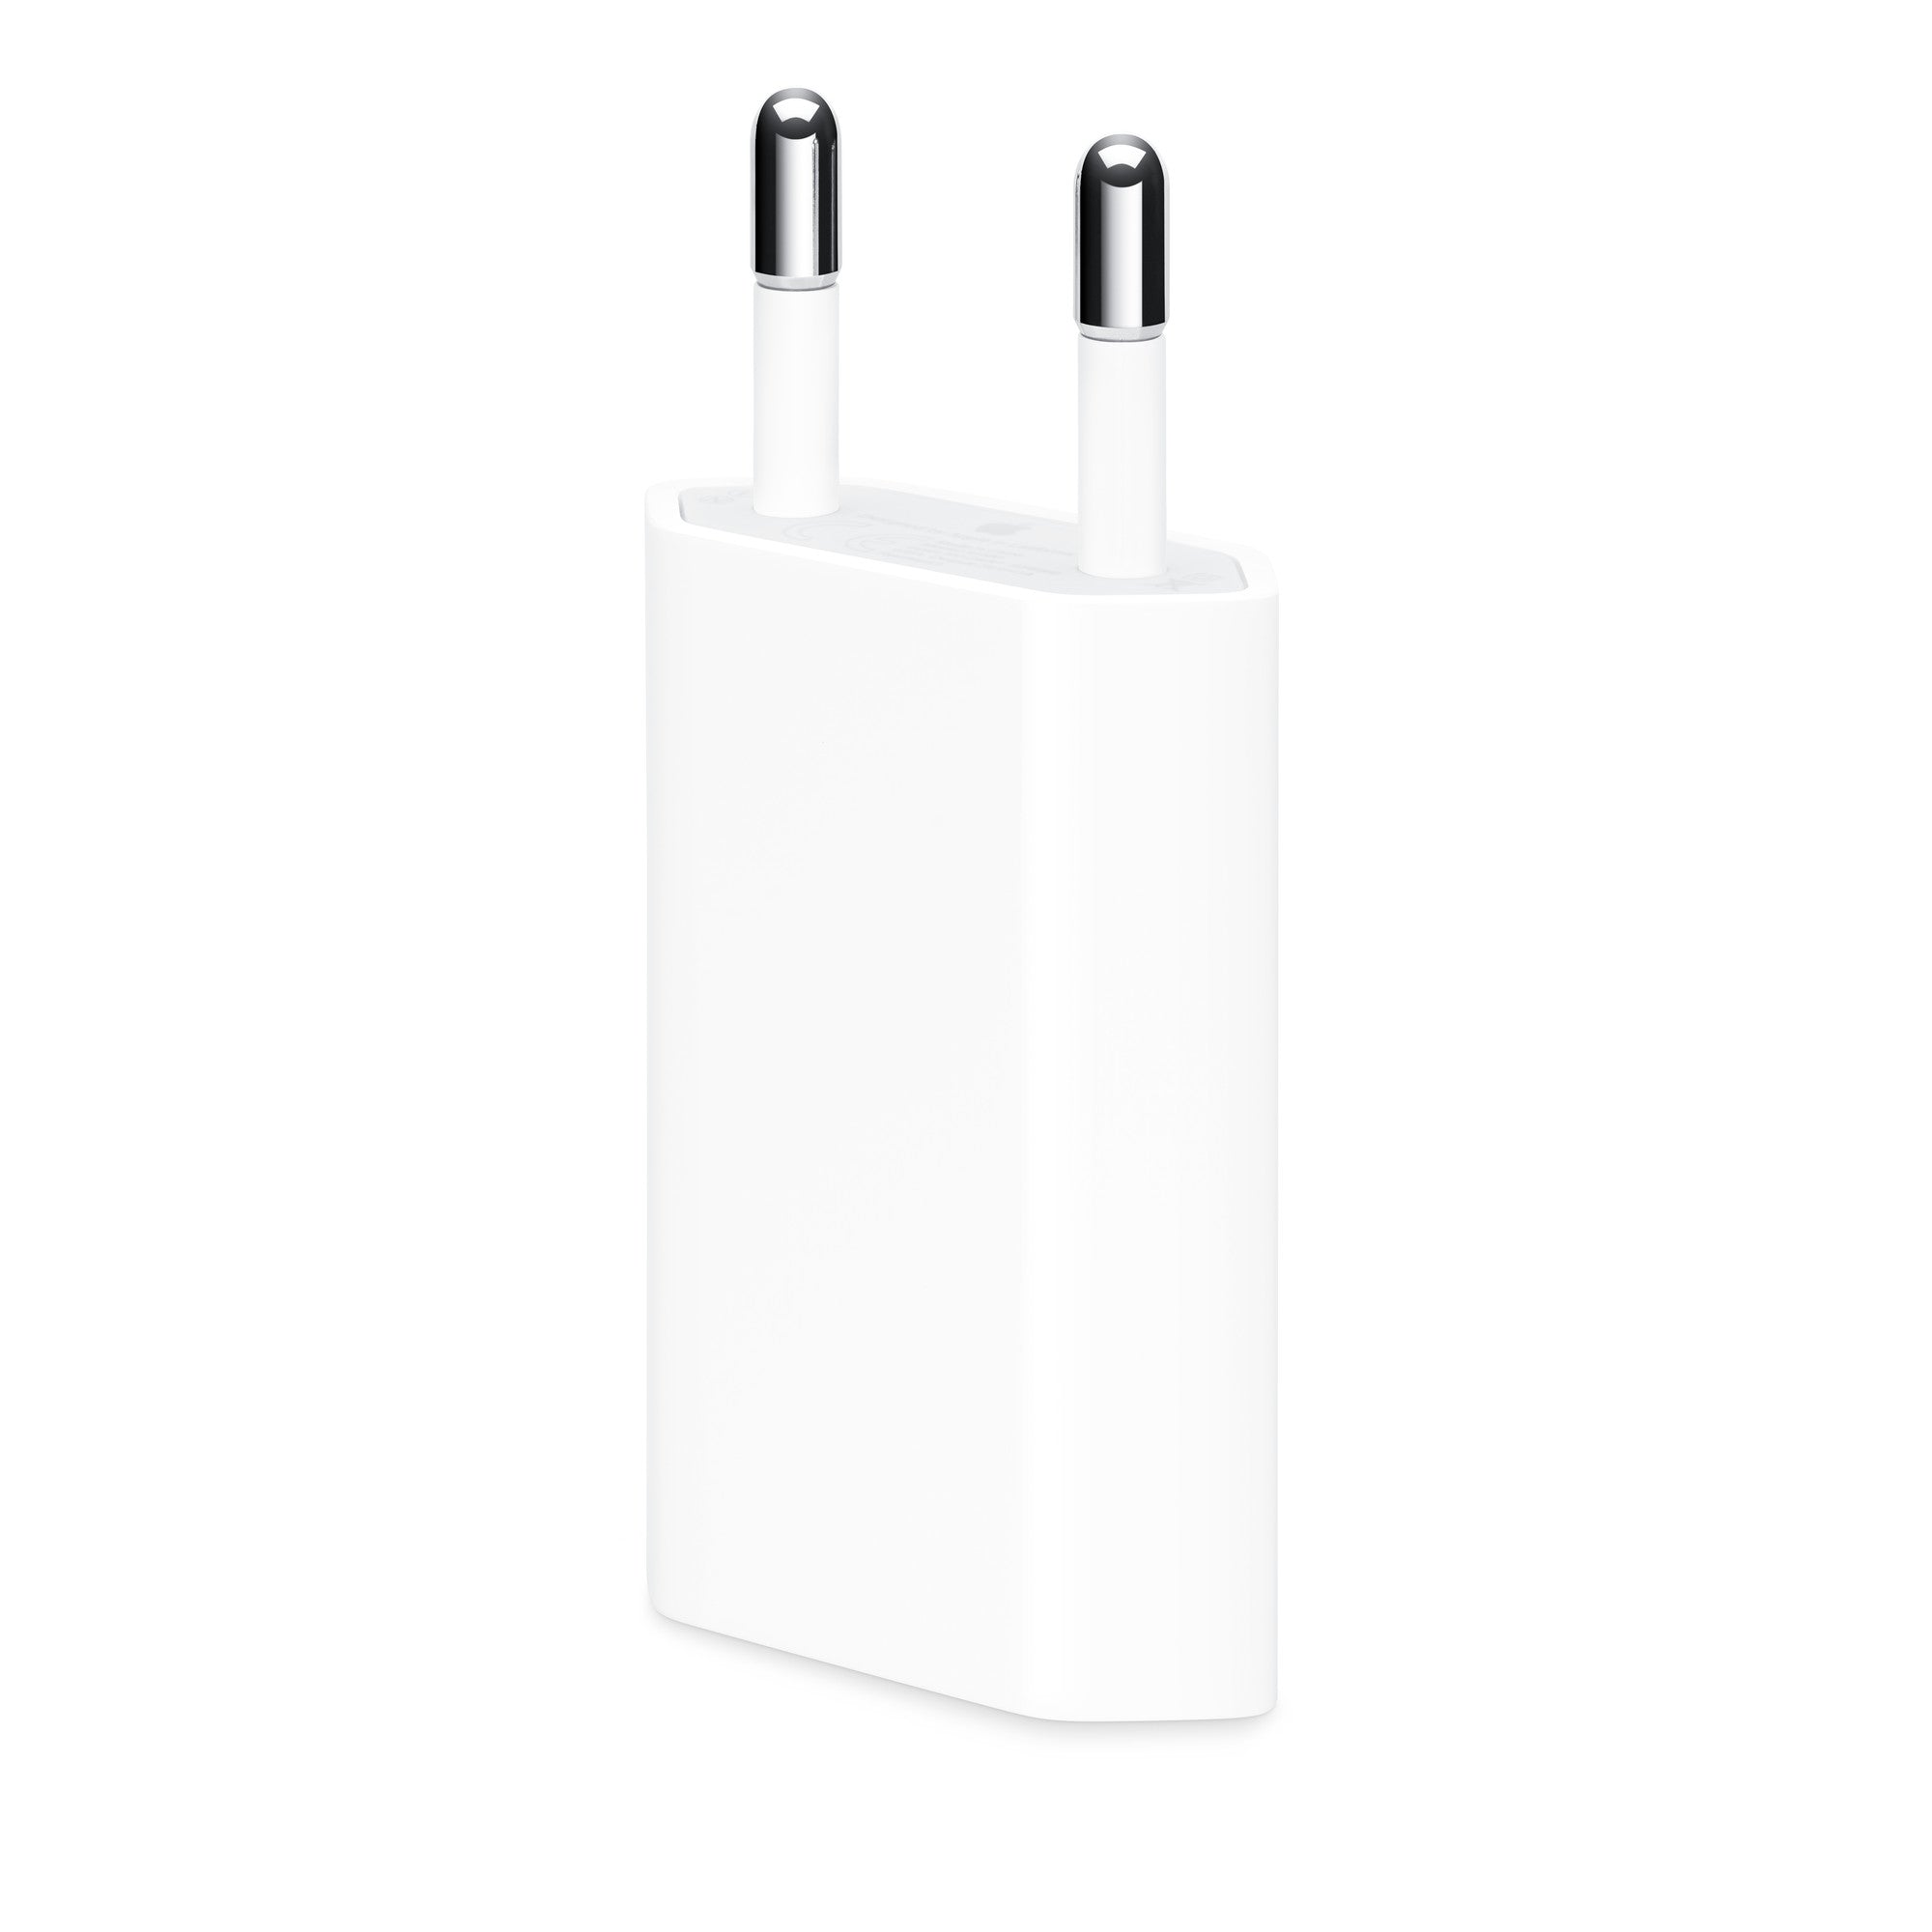 Apple 5W USB Power Adapter (EU)